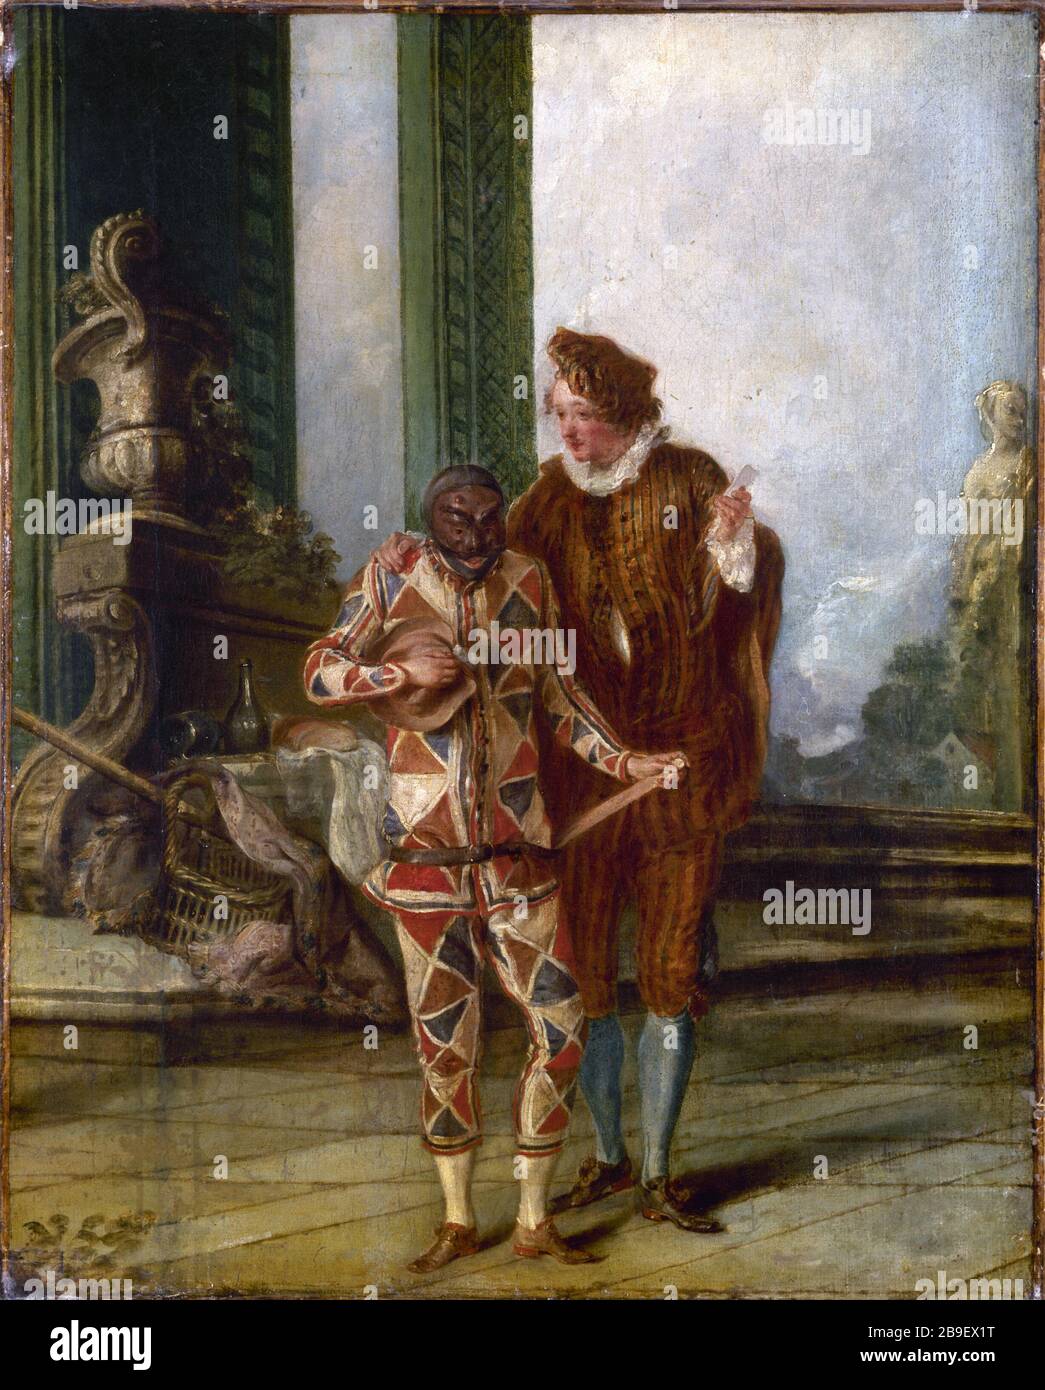 SCENE OF THE Comedie Italienne: ARLEQUIN ET RICOBONI 'Scène de la comédie italienne : Arlequin et Ricoboni, vers 1720'. Huile sur toile. Paris, musée Carnavalet. Stock Photo